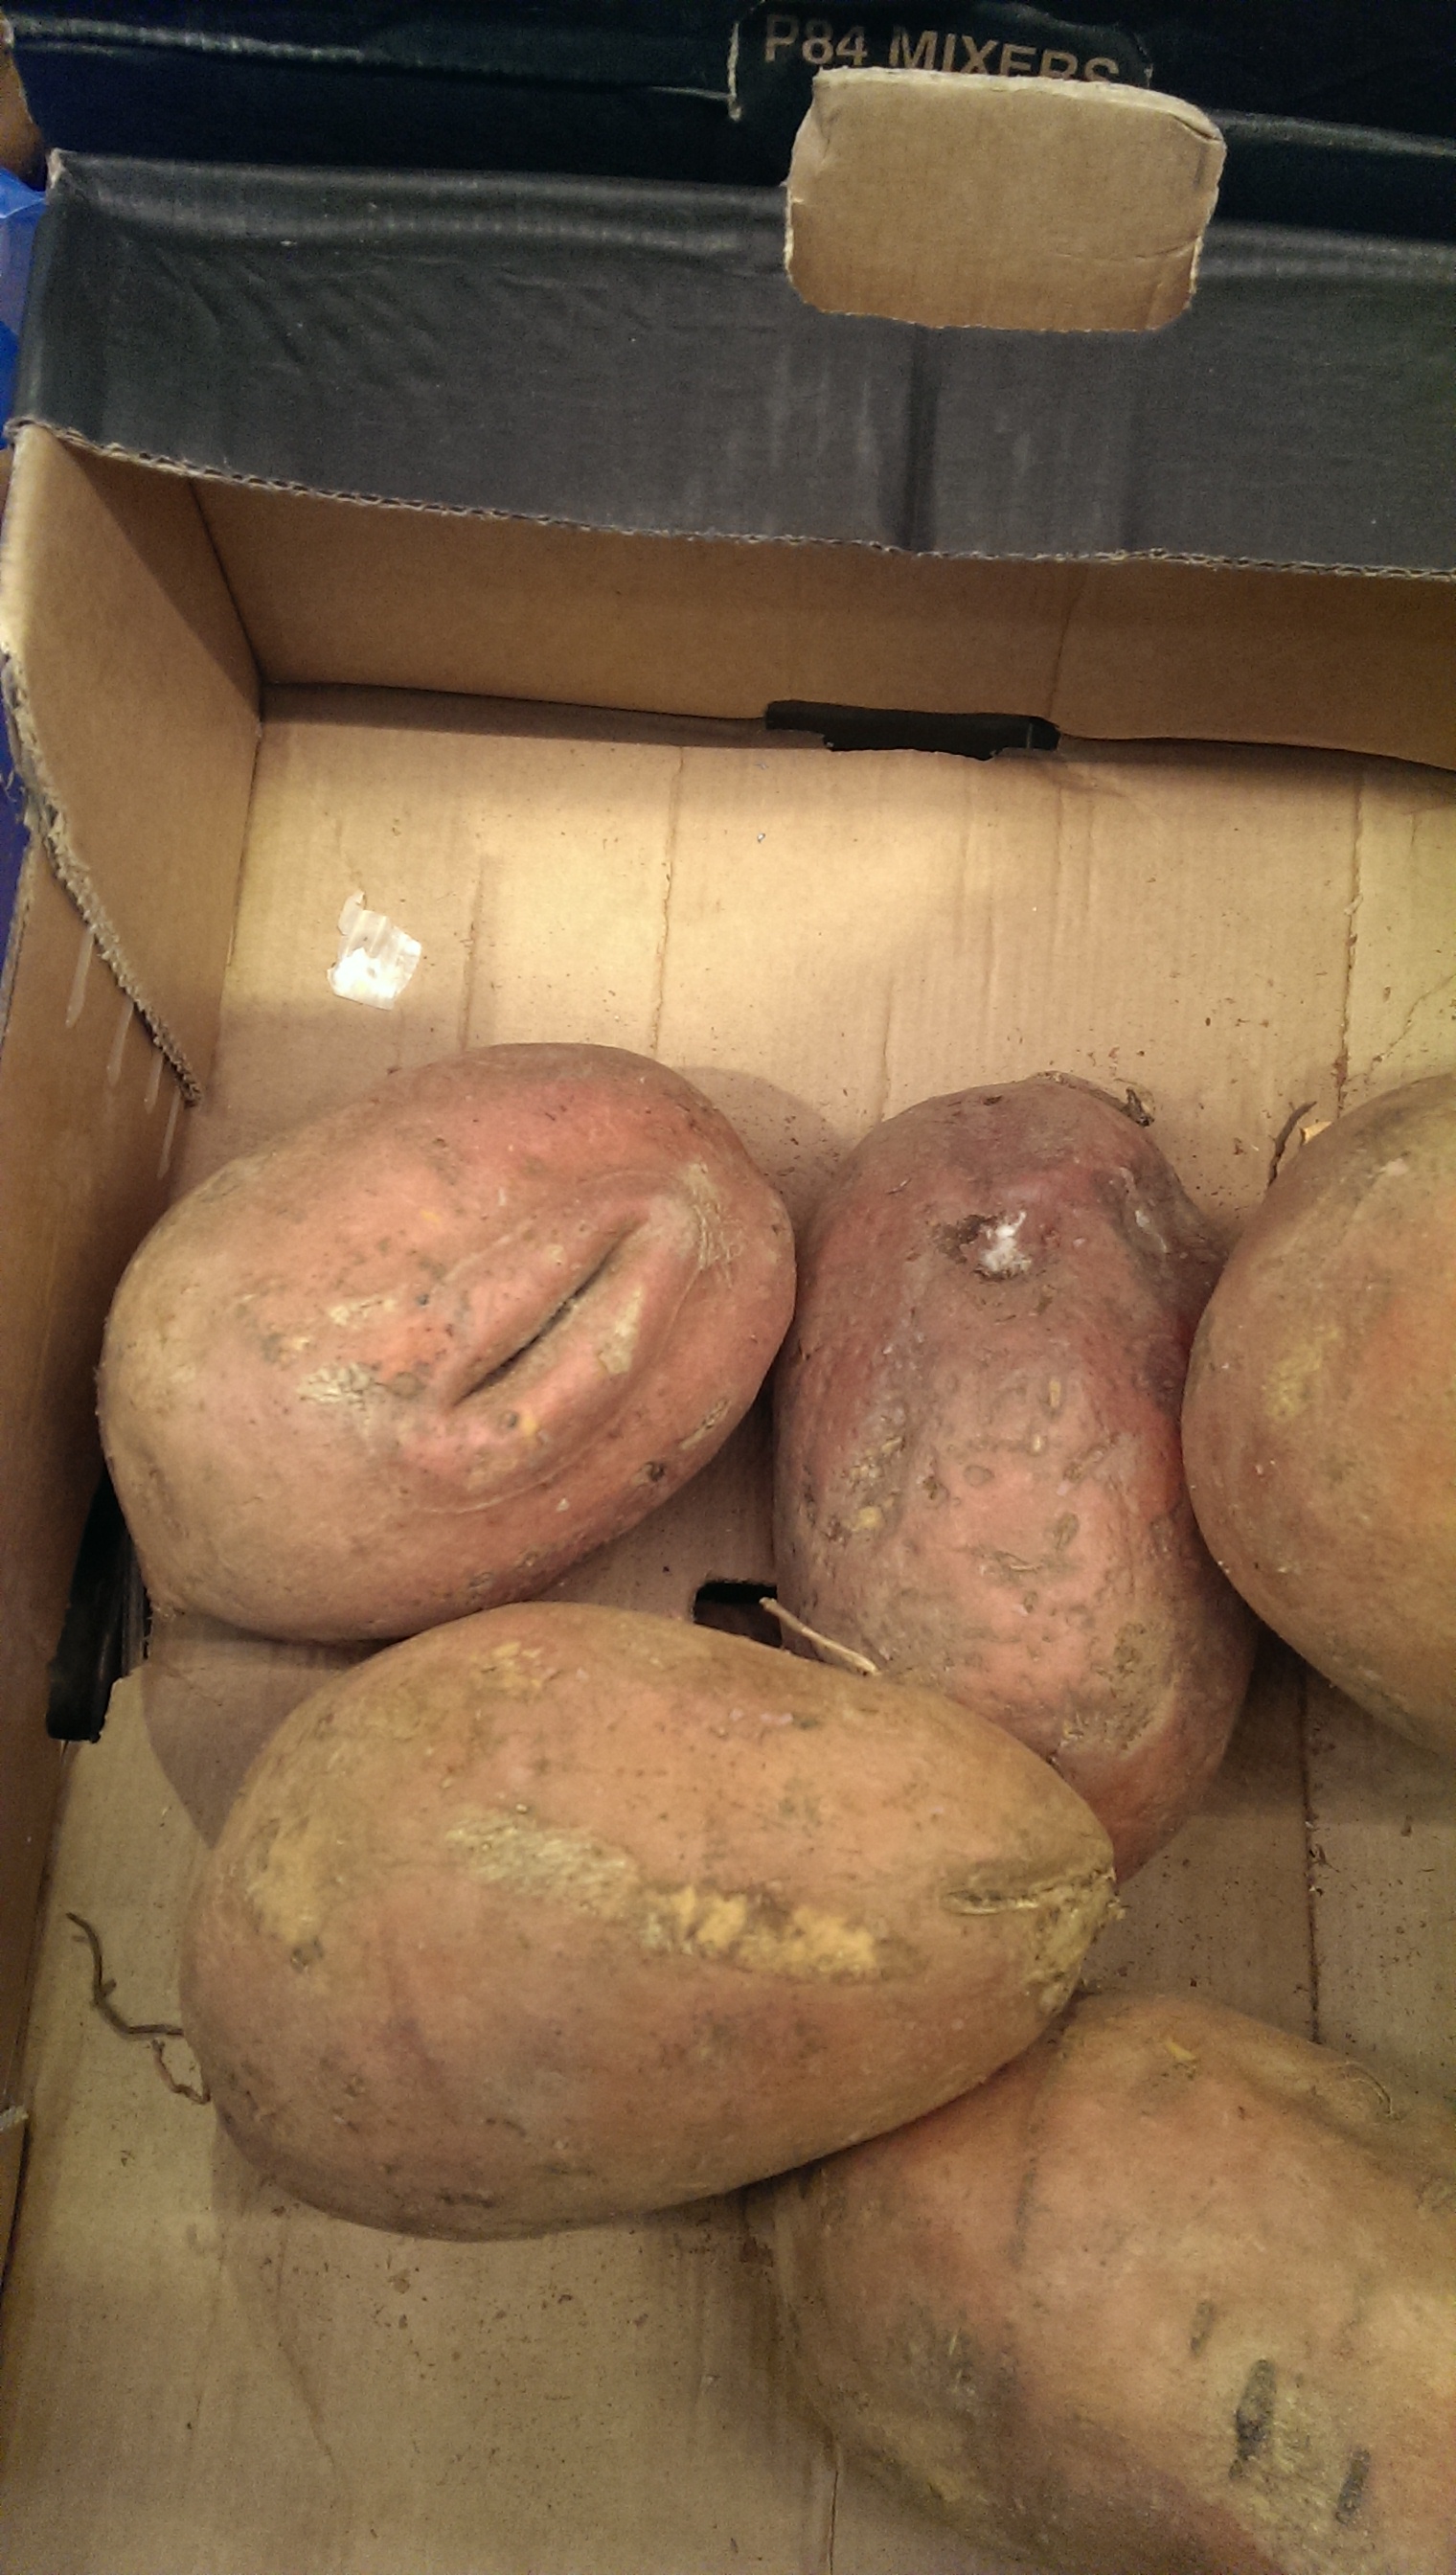 Strangest potato ever?